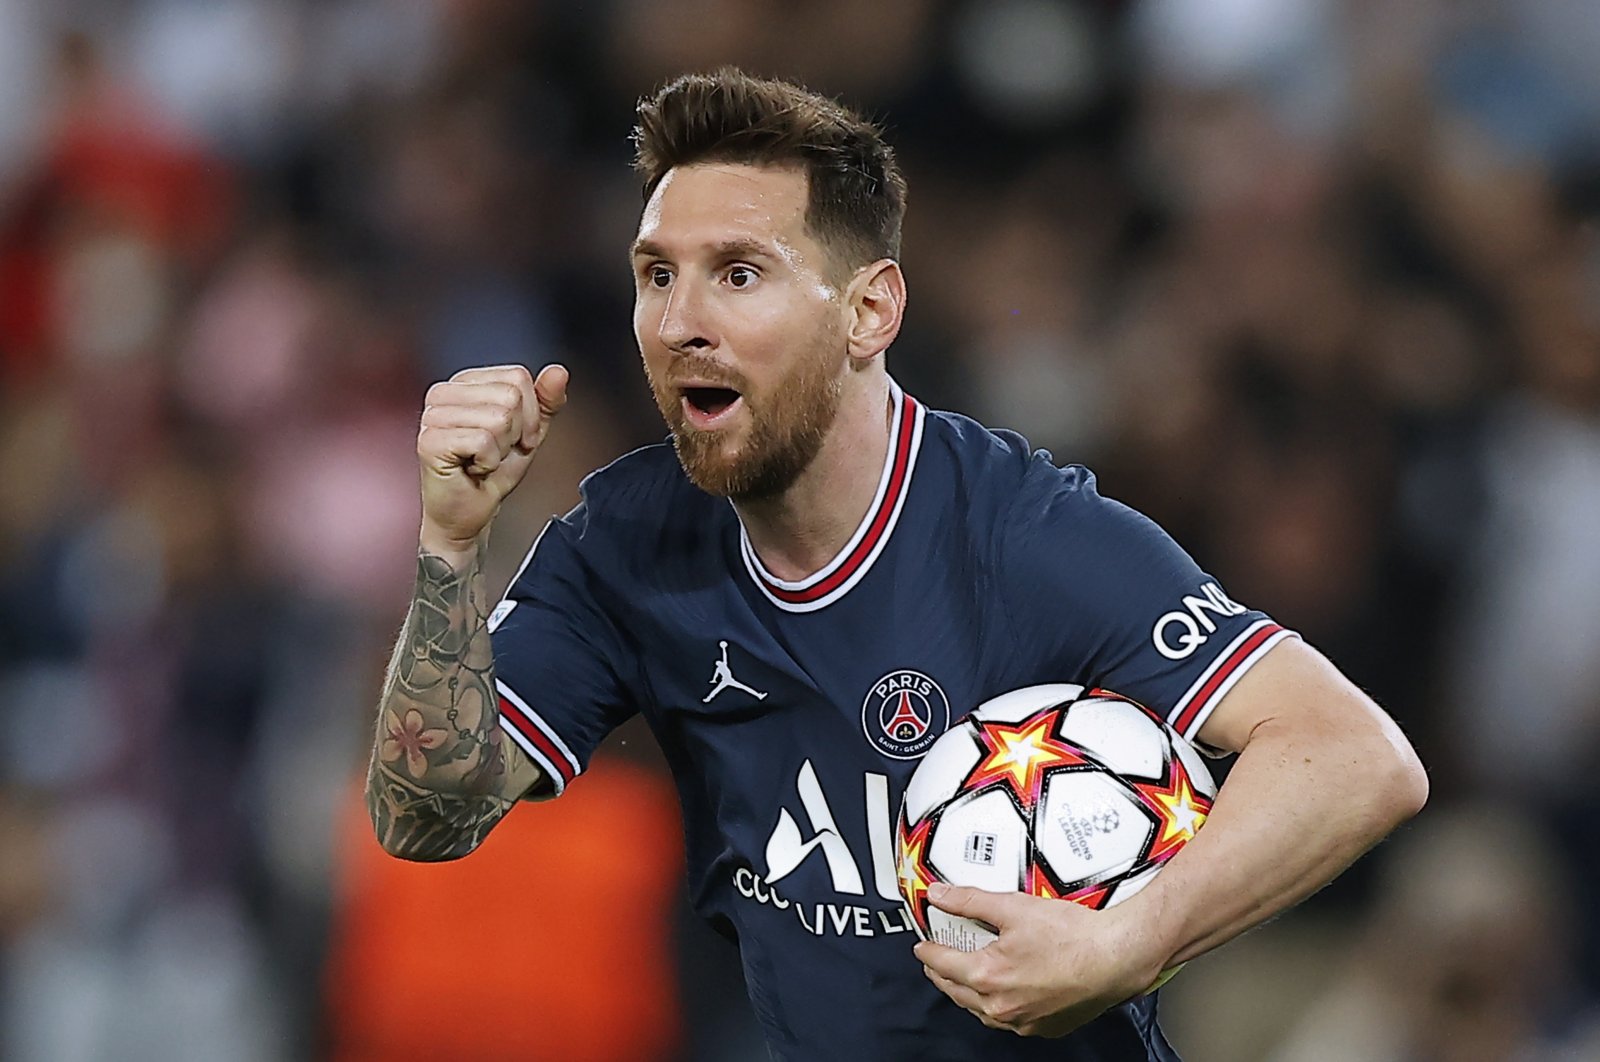 Paris Saint-Germain's Lionel Messi celebrates scoring during a UEFA Champions League match against RB Leipzig in Paris, France, Oct. 19, 2021. (EPA Photo)